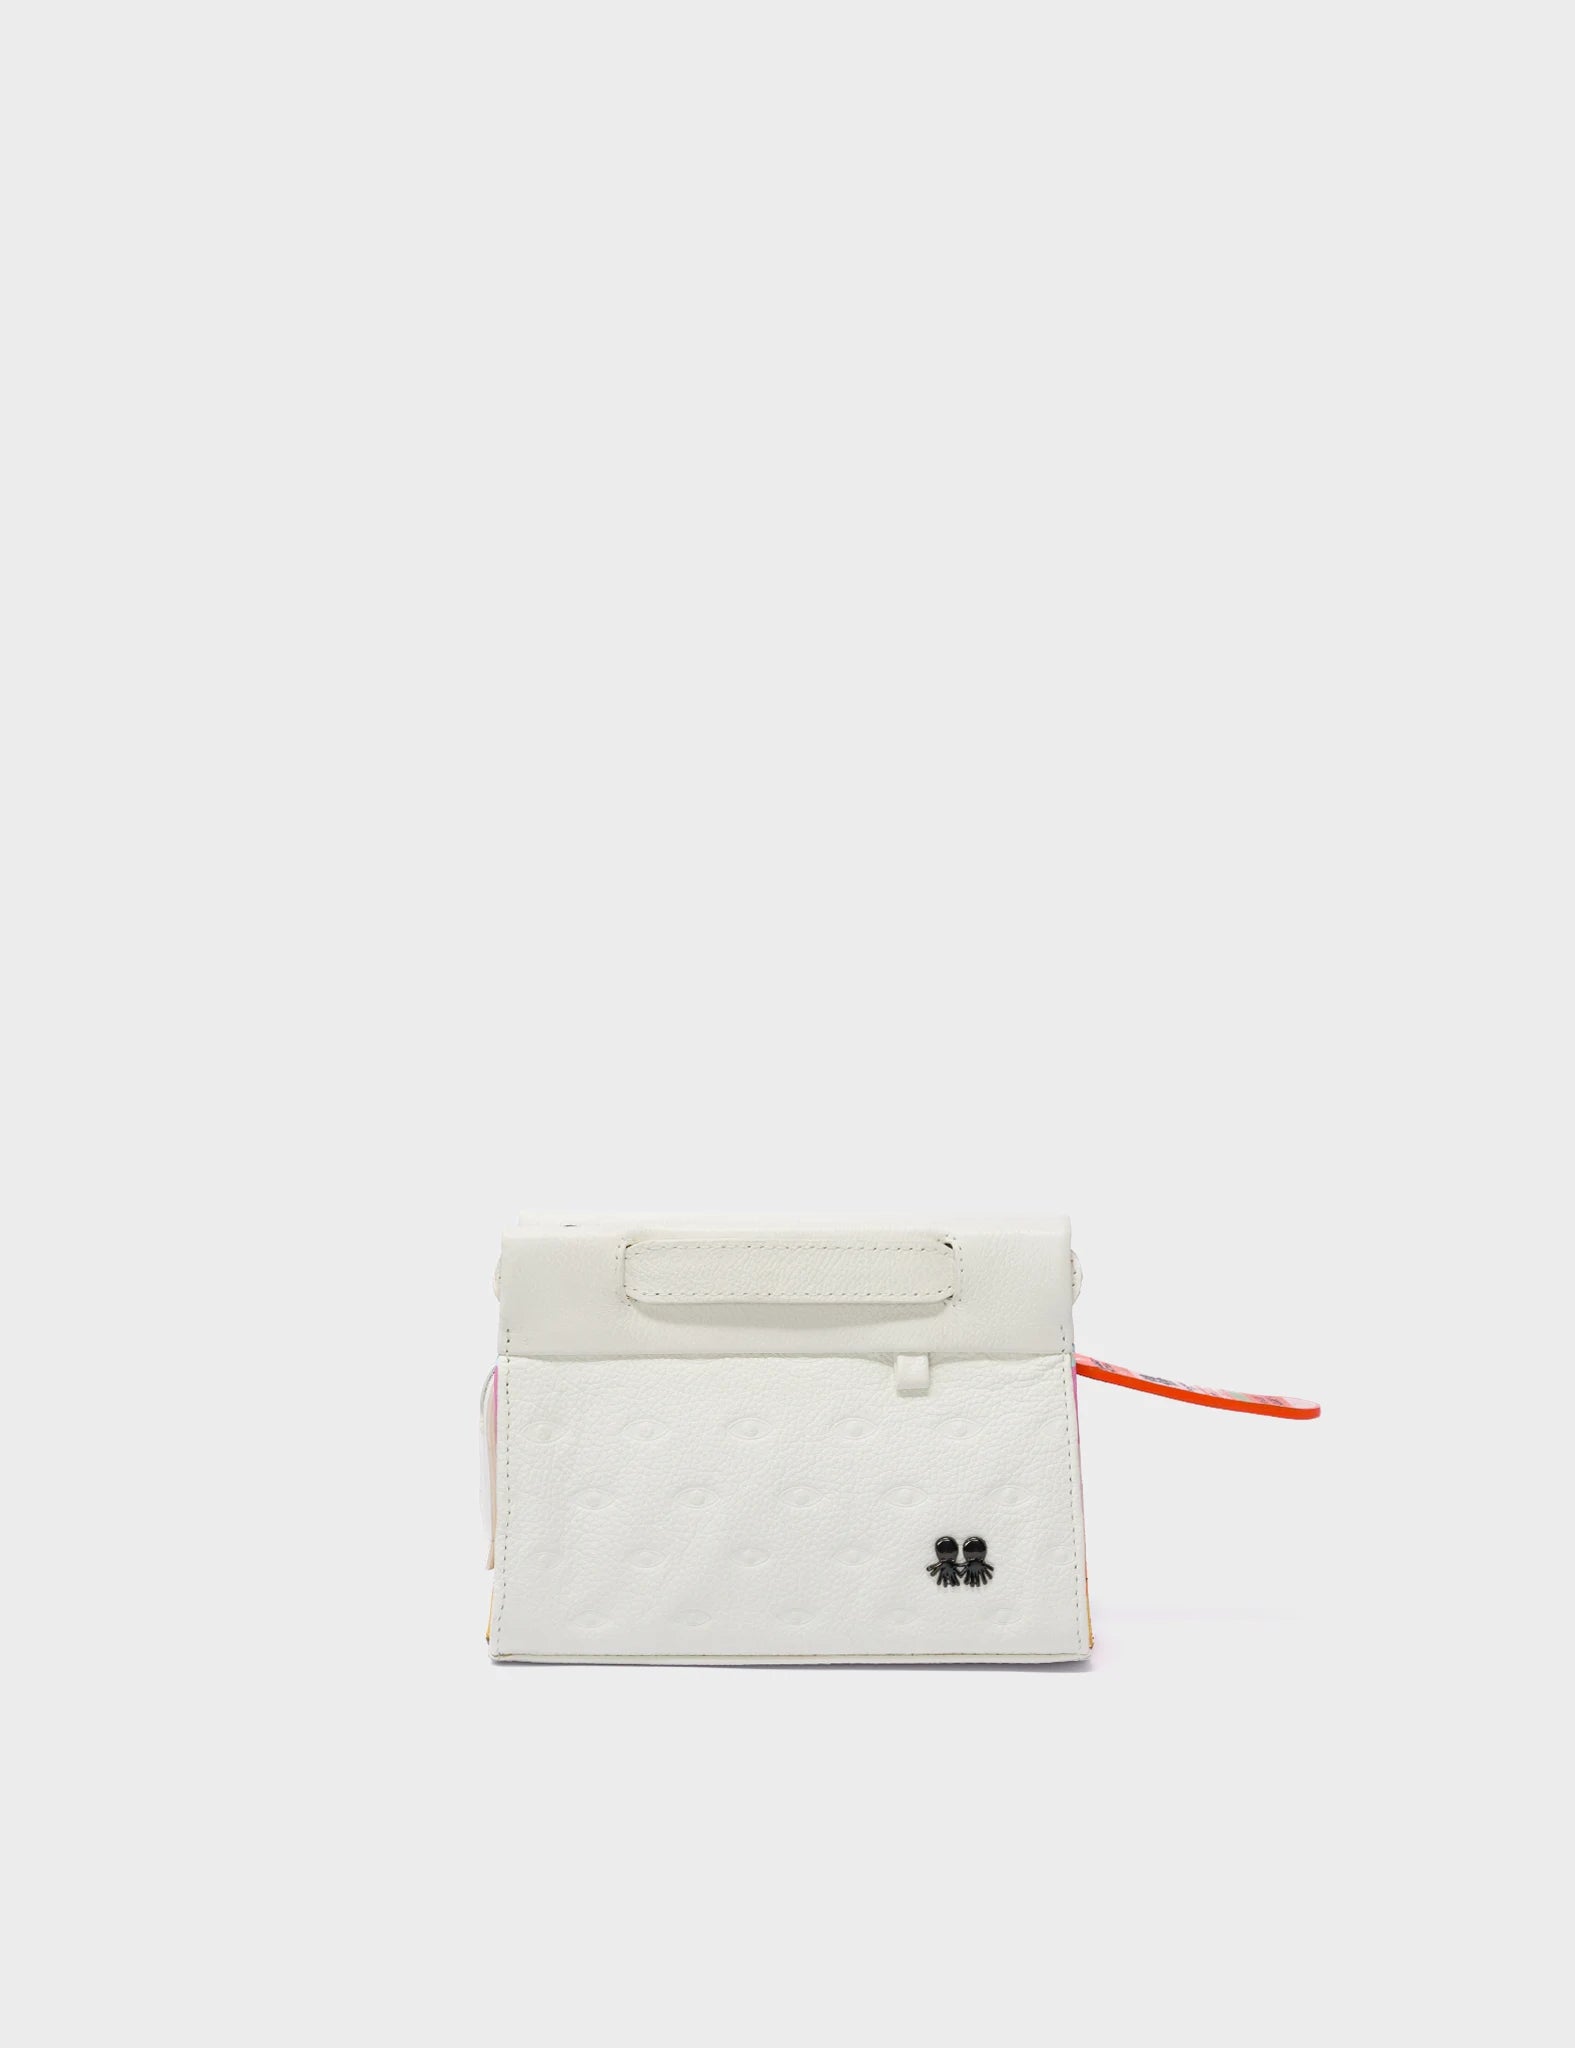 Vali Crossbody Micro Cream Leather Bag - Groovin’ Rainbow Design - Front